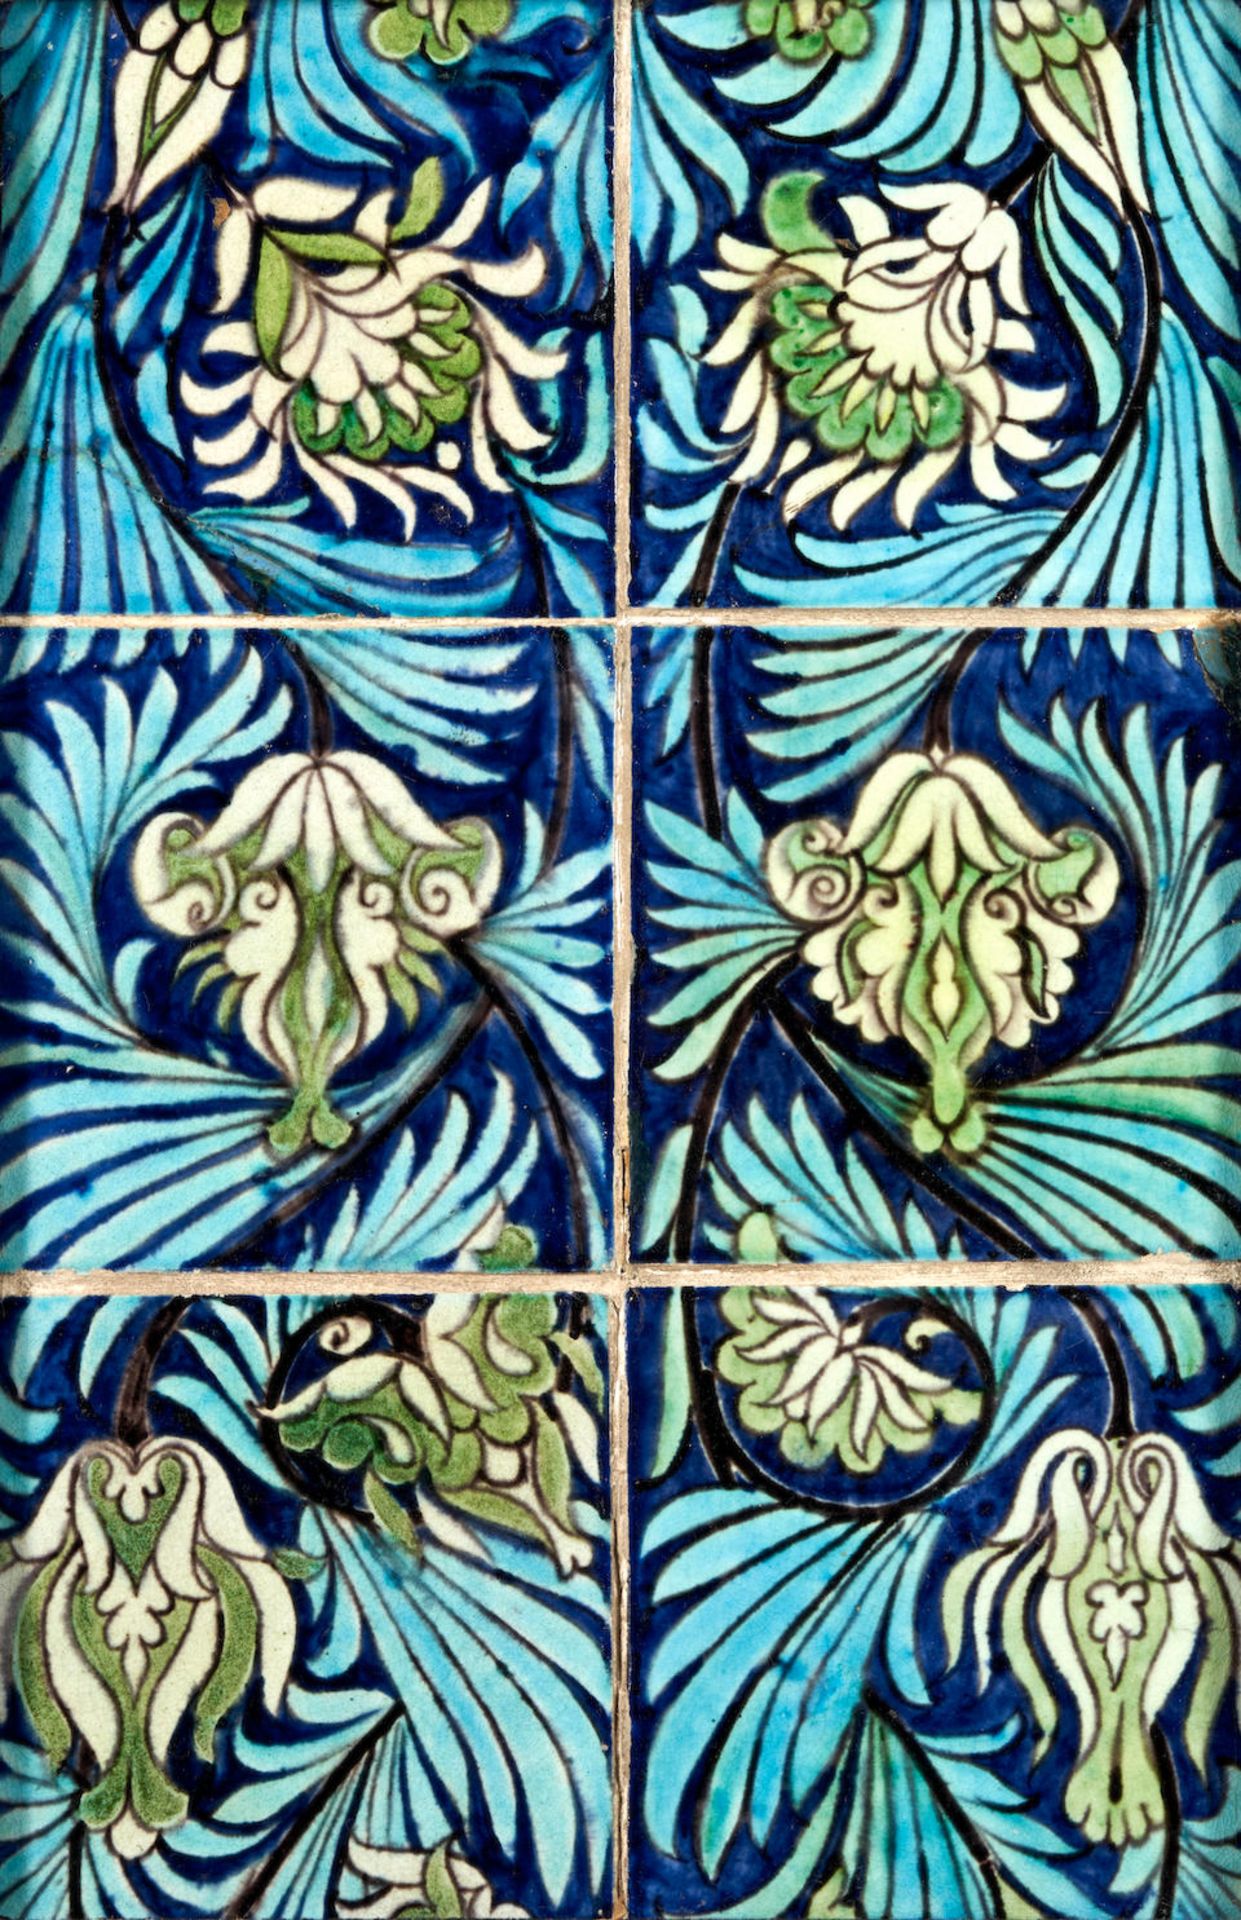 SIX WILLIAM DE MORGAN 'PERSIAN' TILES, England, late 19th century, each tile 6 x 6, set in a com...